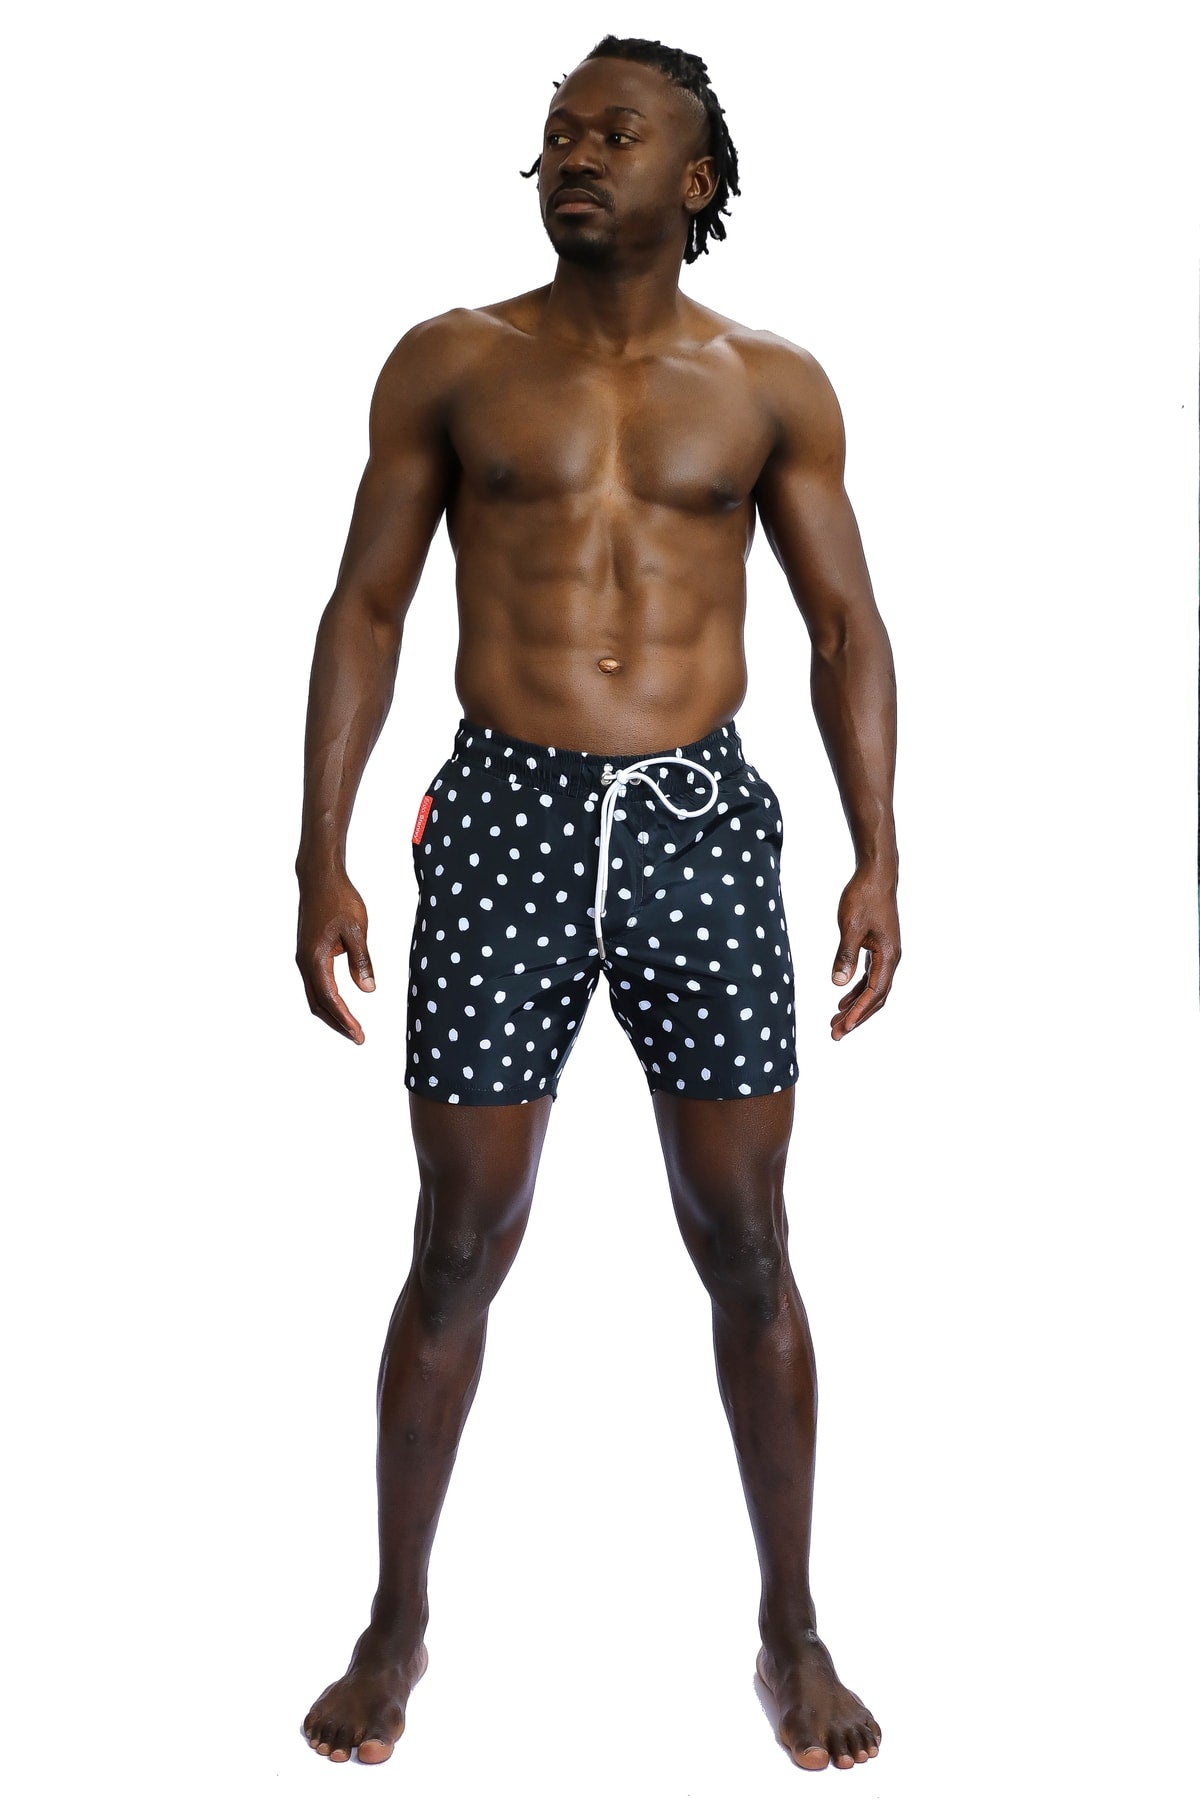 Men's Patterned Black Sea Shorts